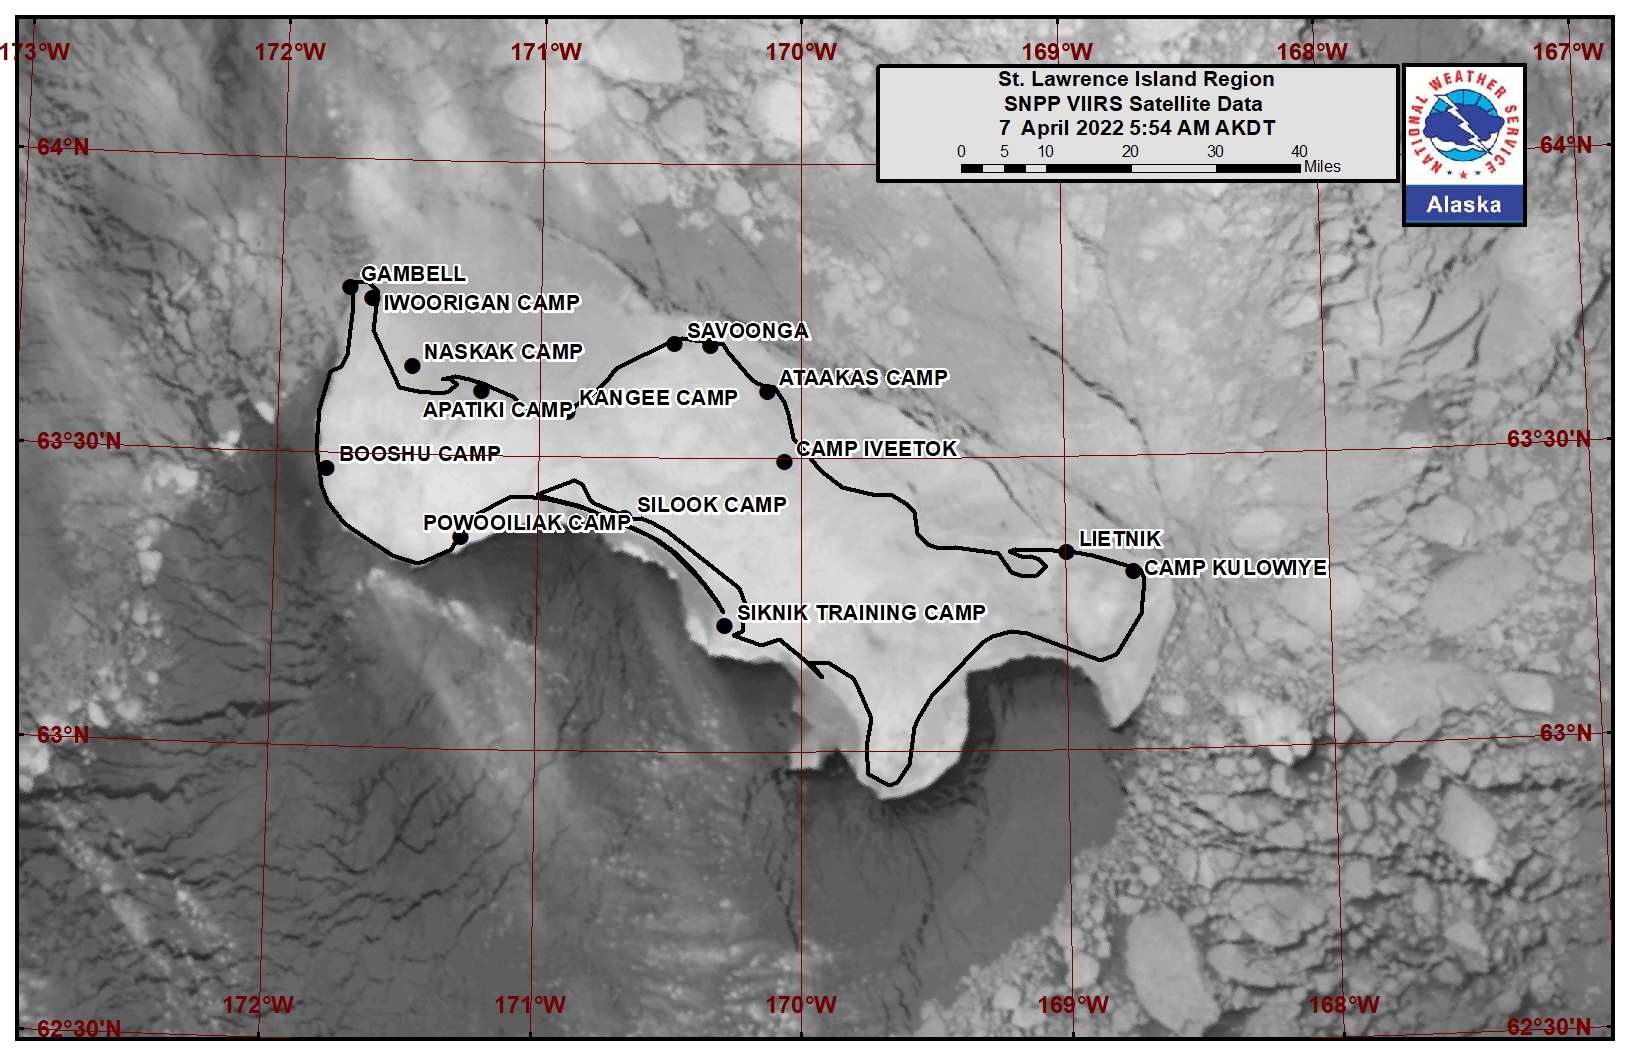 St. Lawrence Island Area Satellite Image